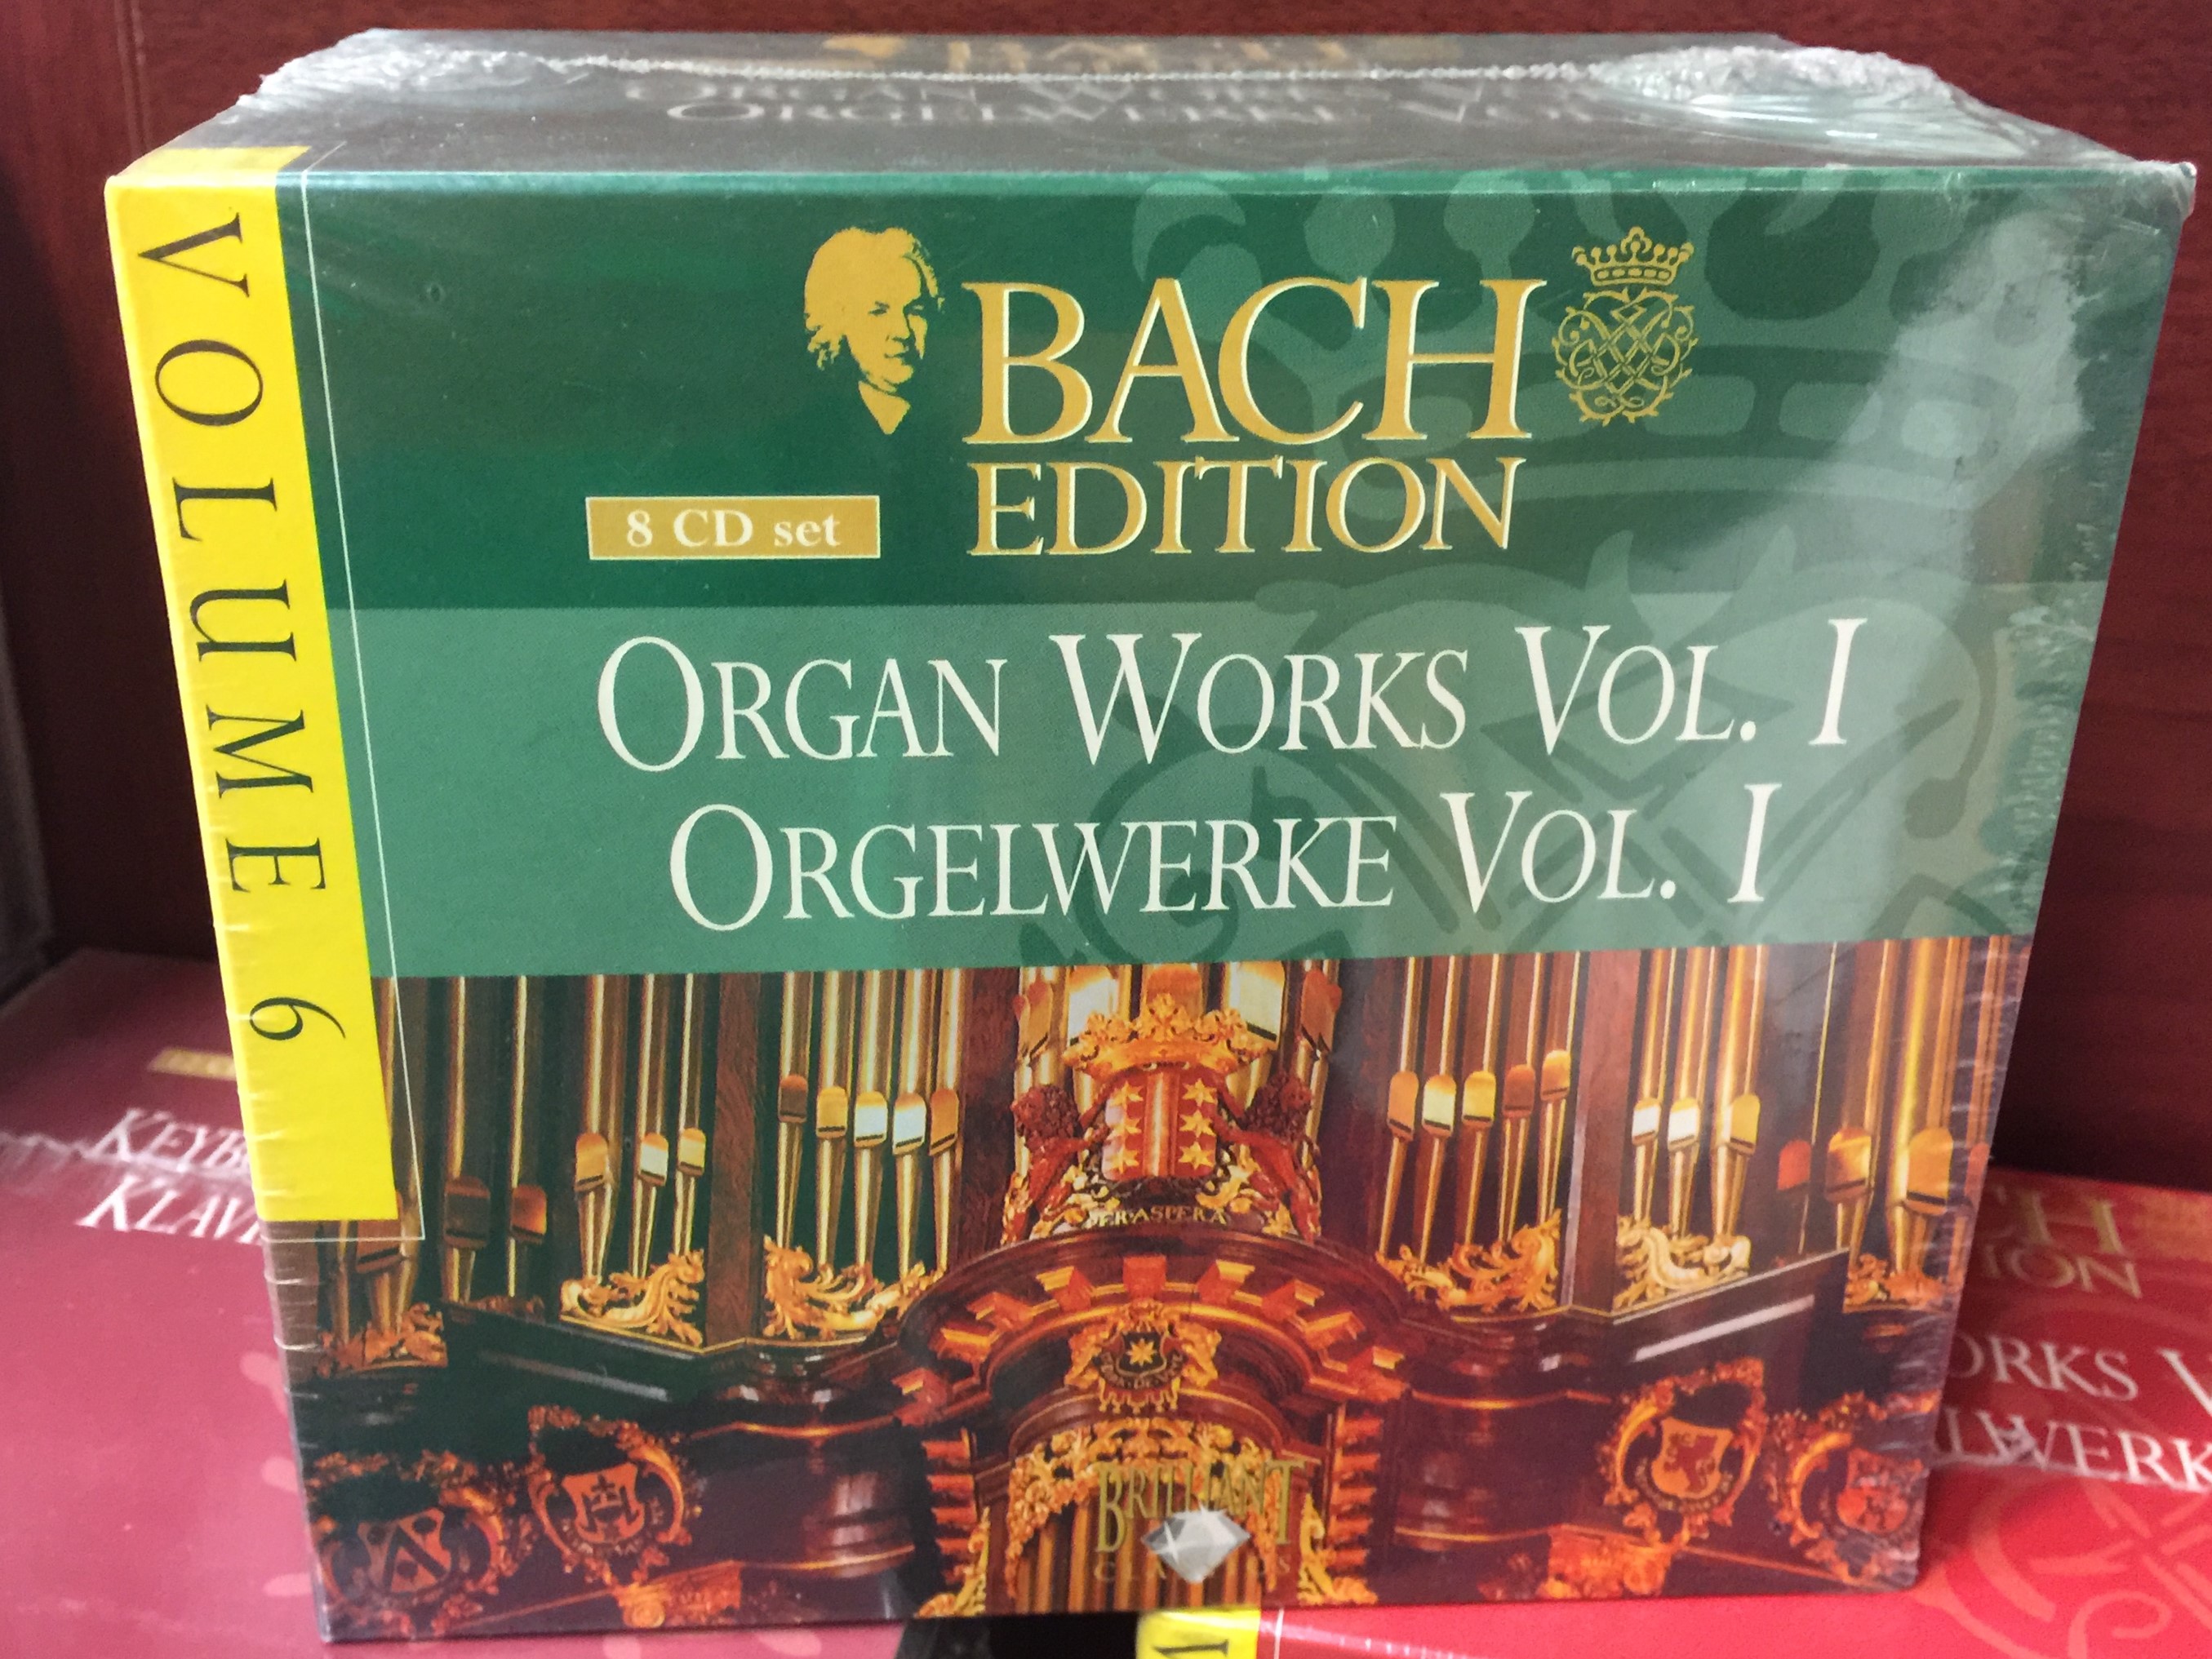 bach-edition-volume-6-organ-works-vol.-i-orgelwerke-vol.-i-brilliant-classics-8x-audio-cd-box-set-99365-1-.jpg